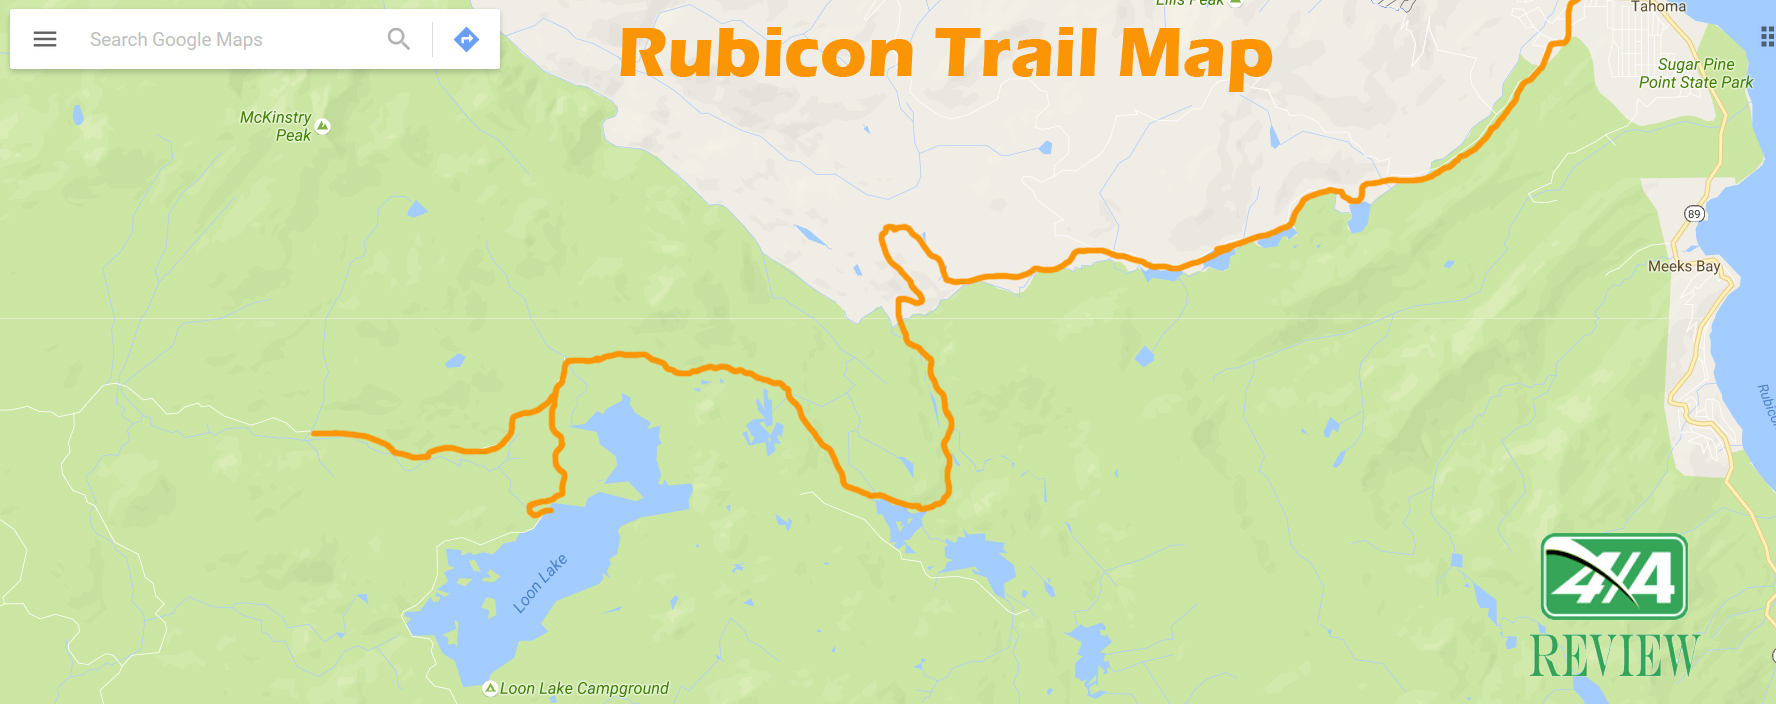 Rubicon Trail Map